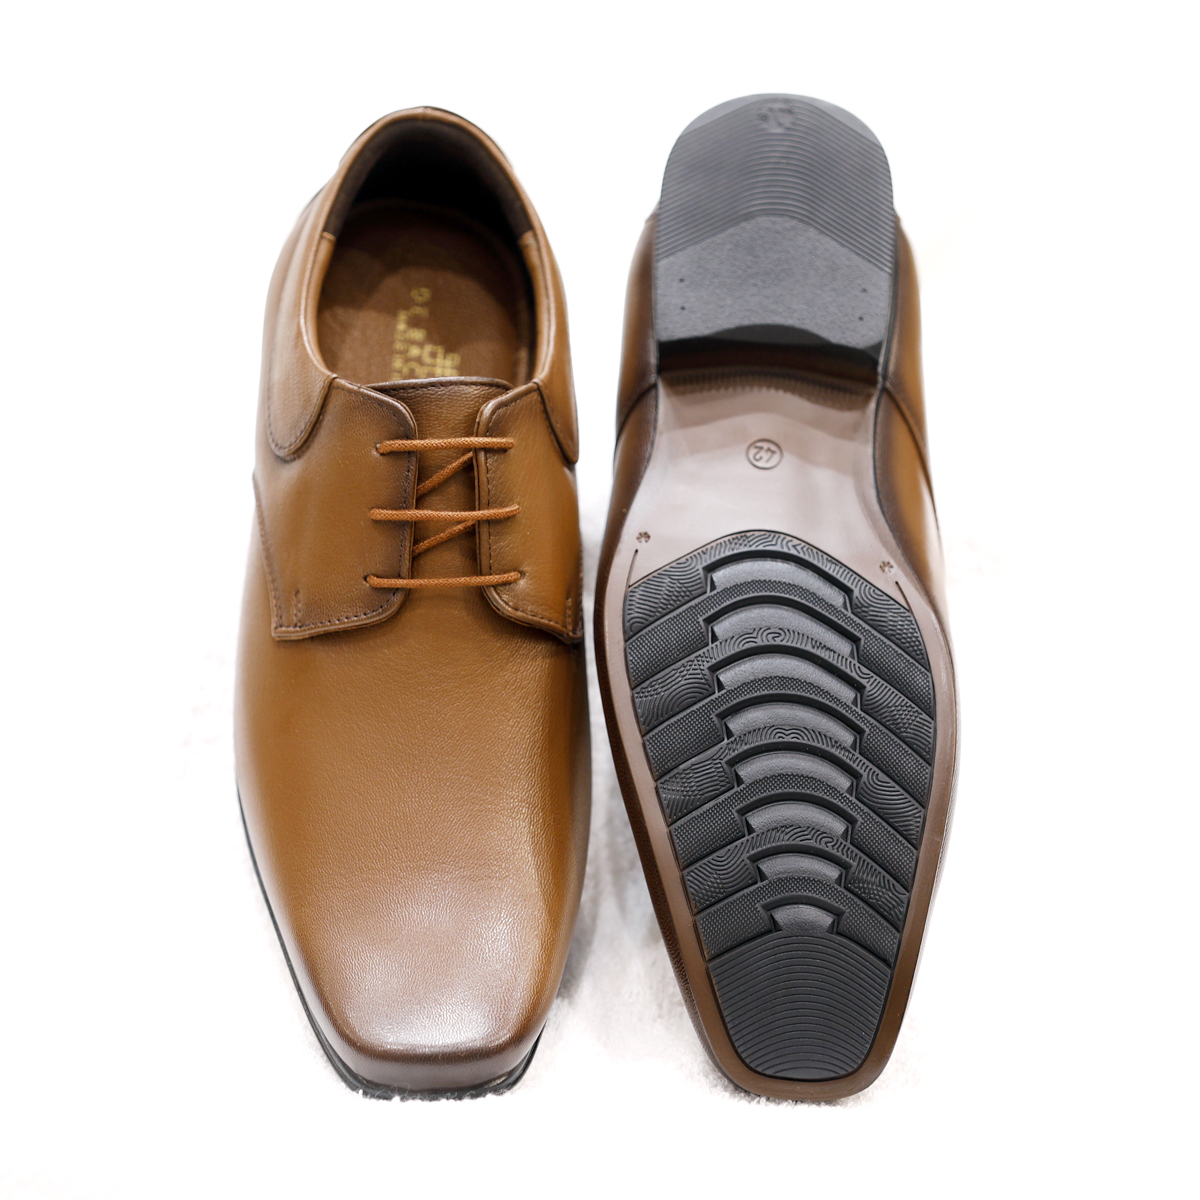 Debackers Mens Formal Shoe 2200